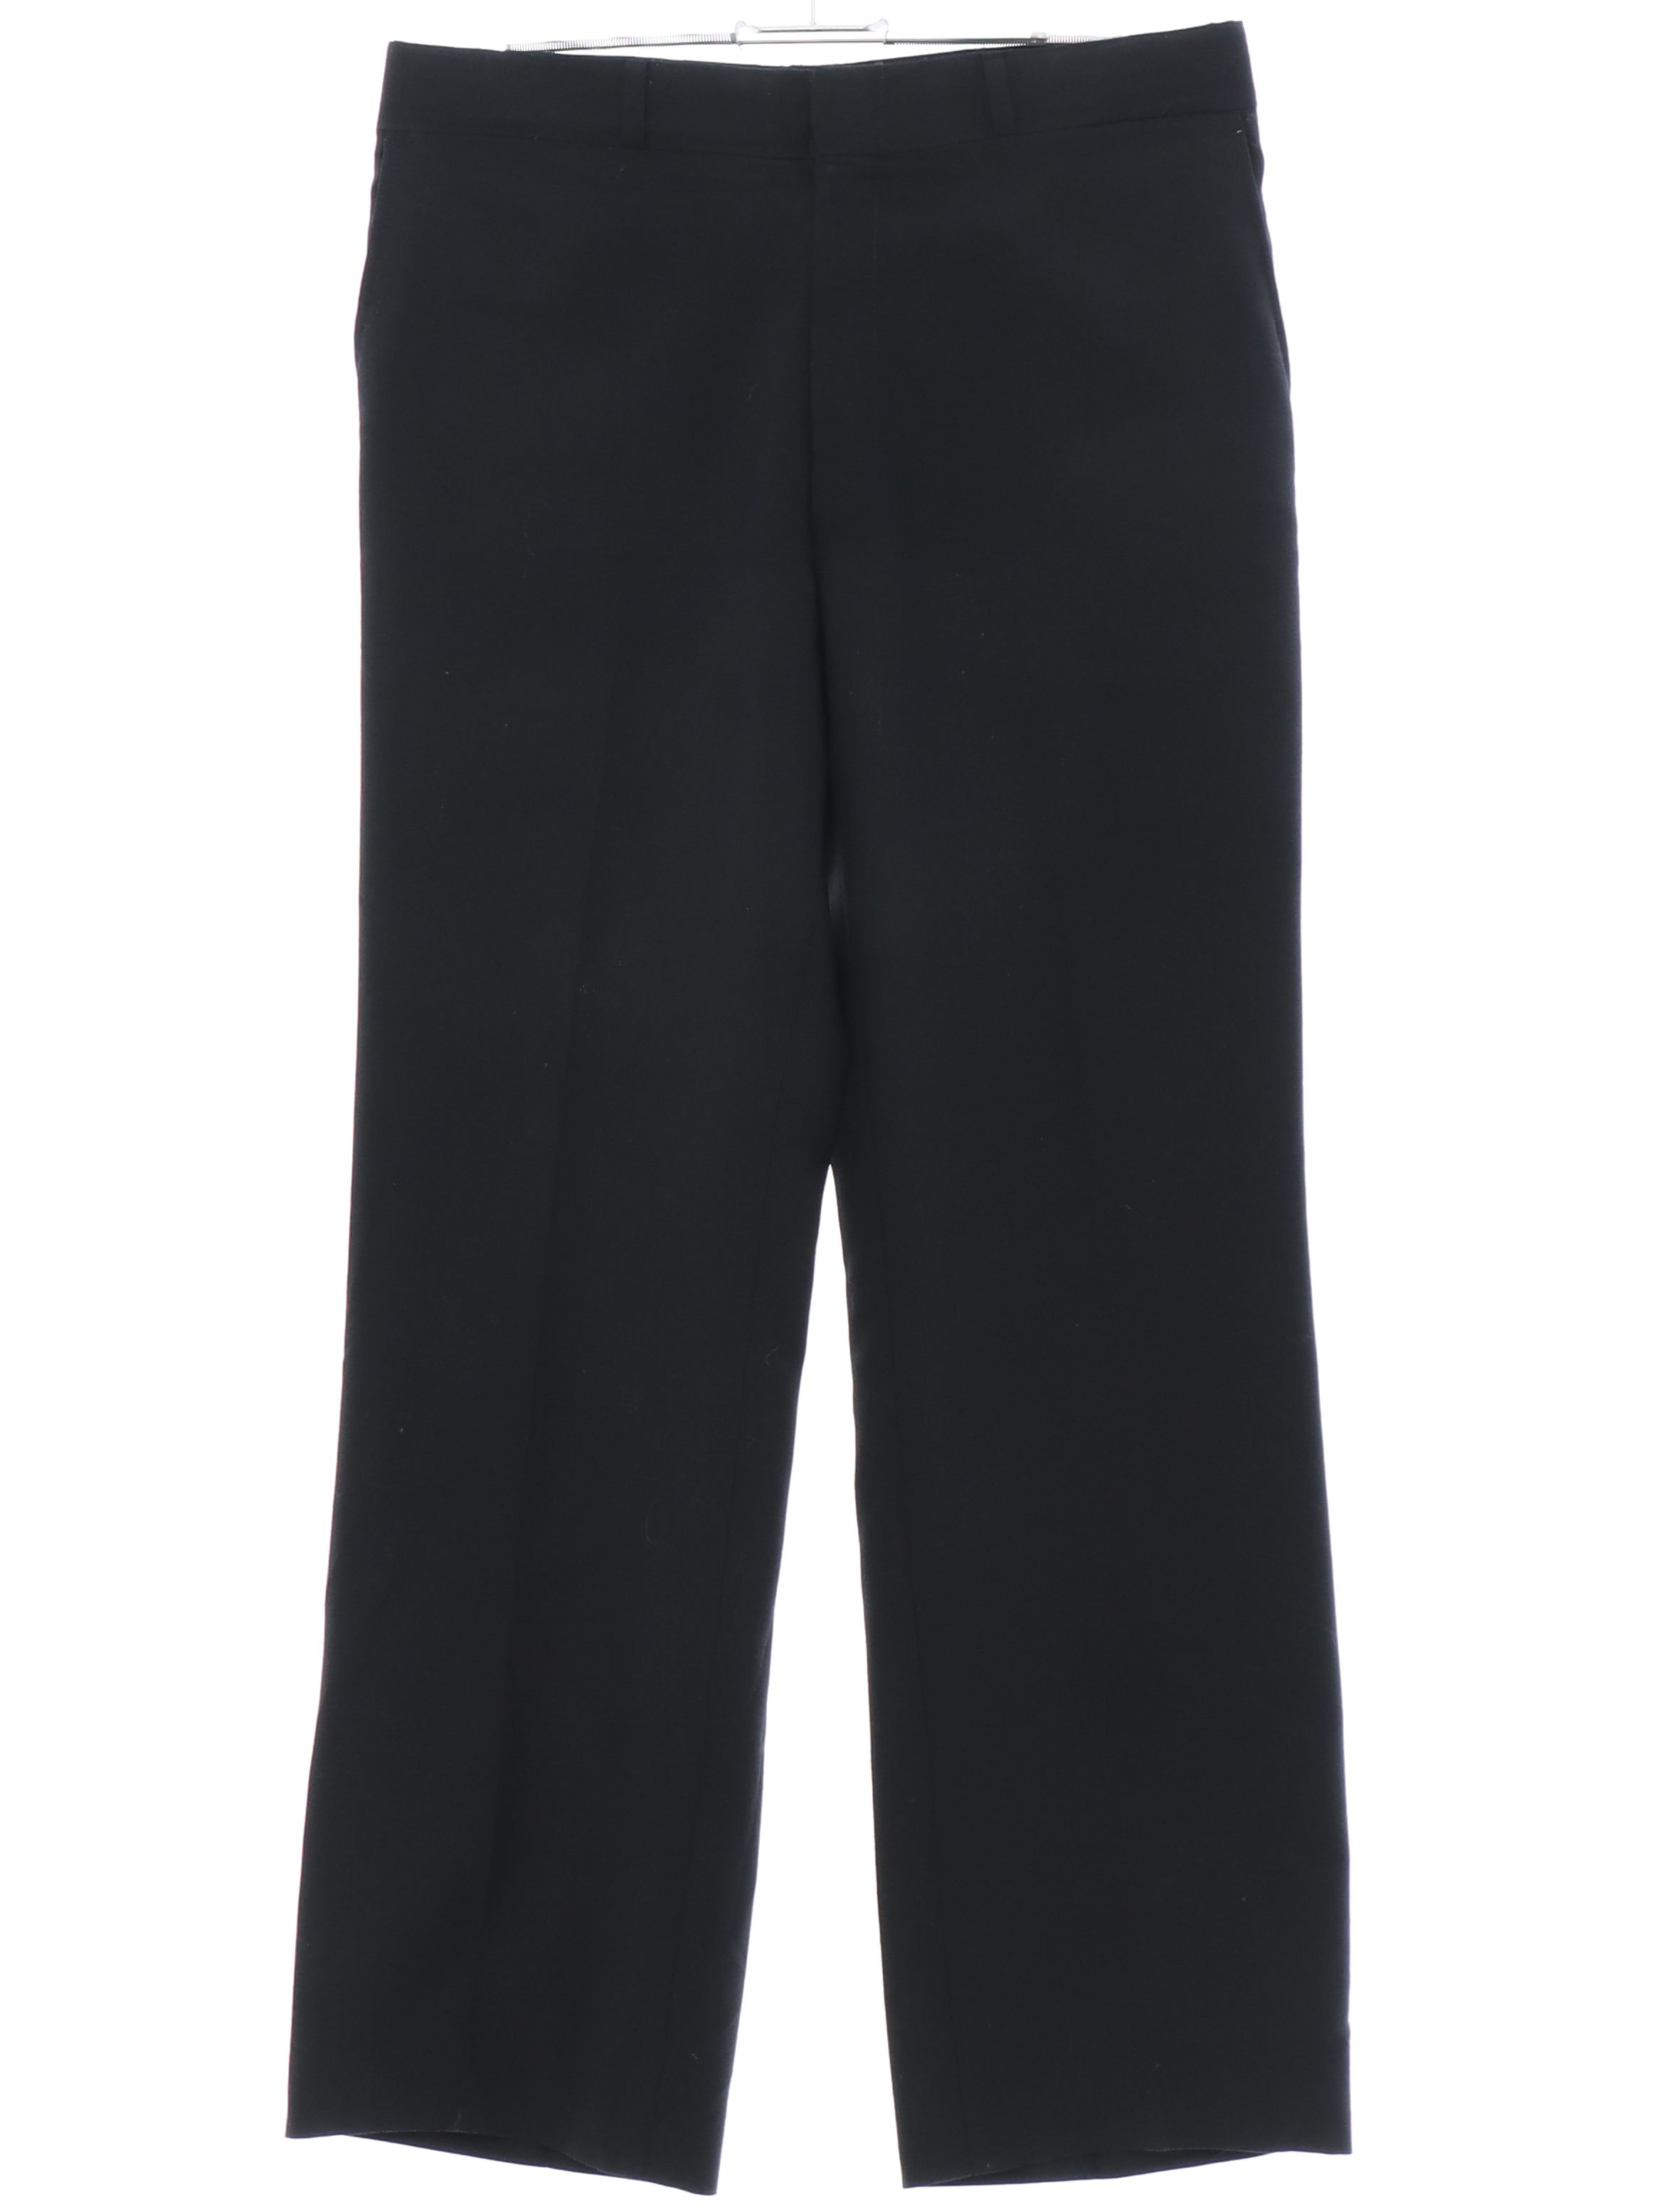 Retro 80's Pants: 80s -Adams Row- Mens black solid colored wool ...